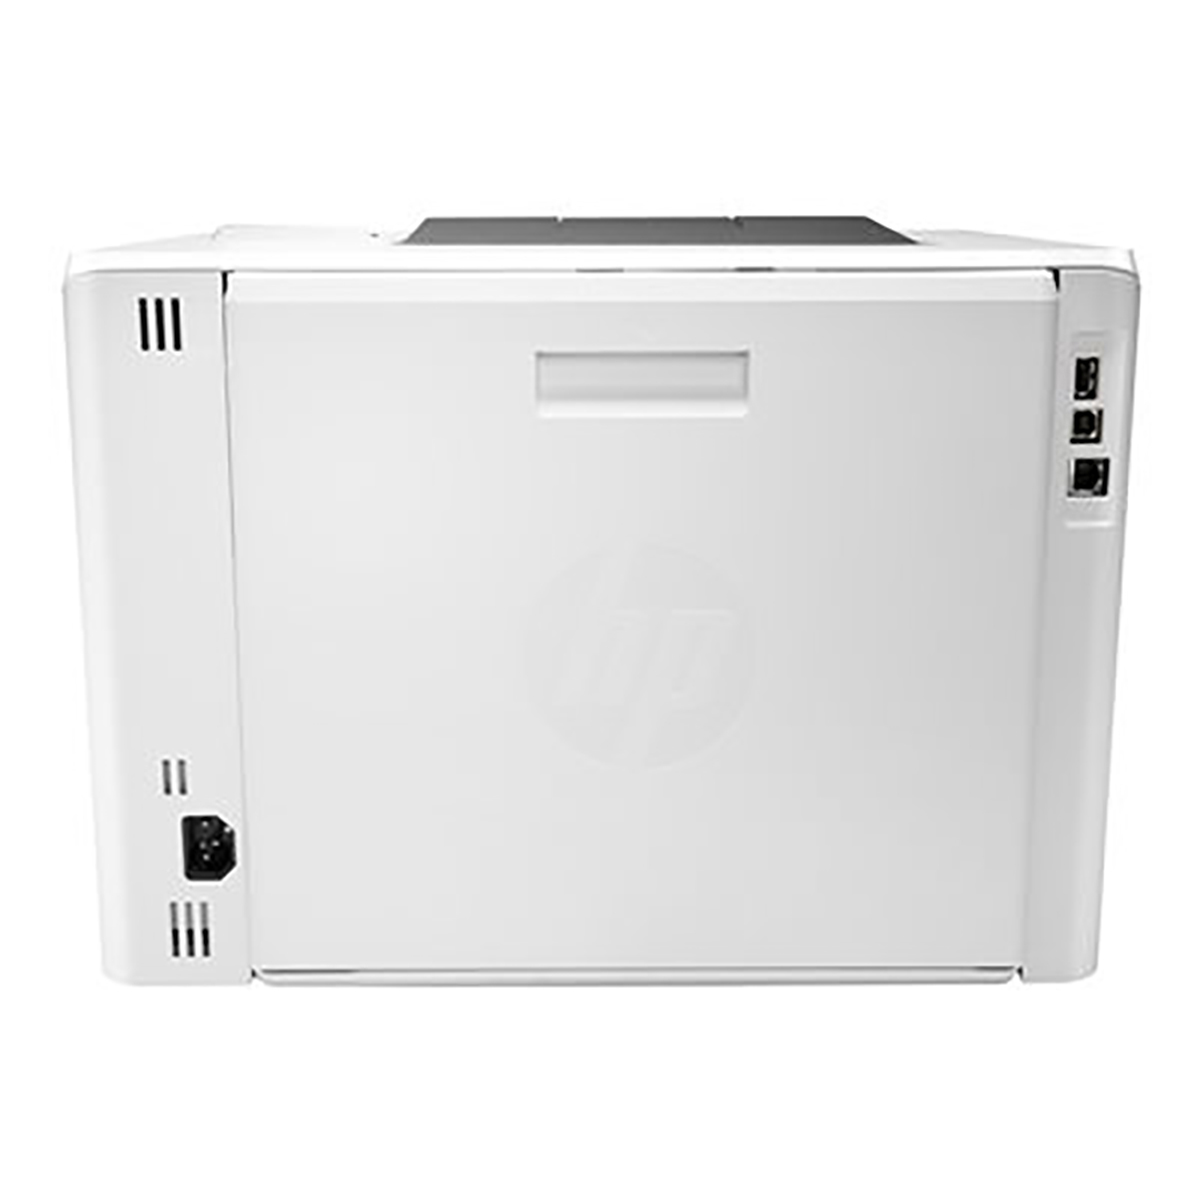 HP Pro M452dn Color LaserJet Printer